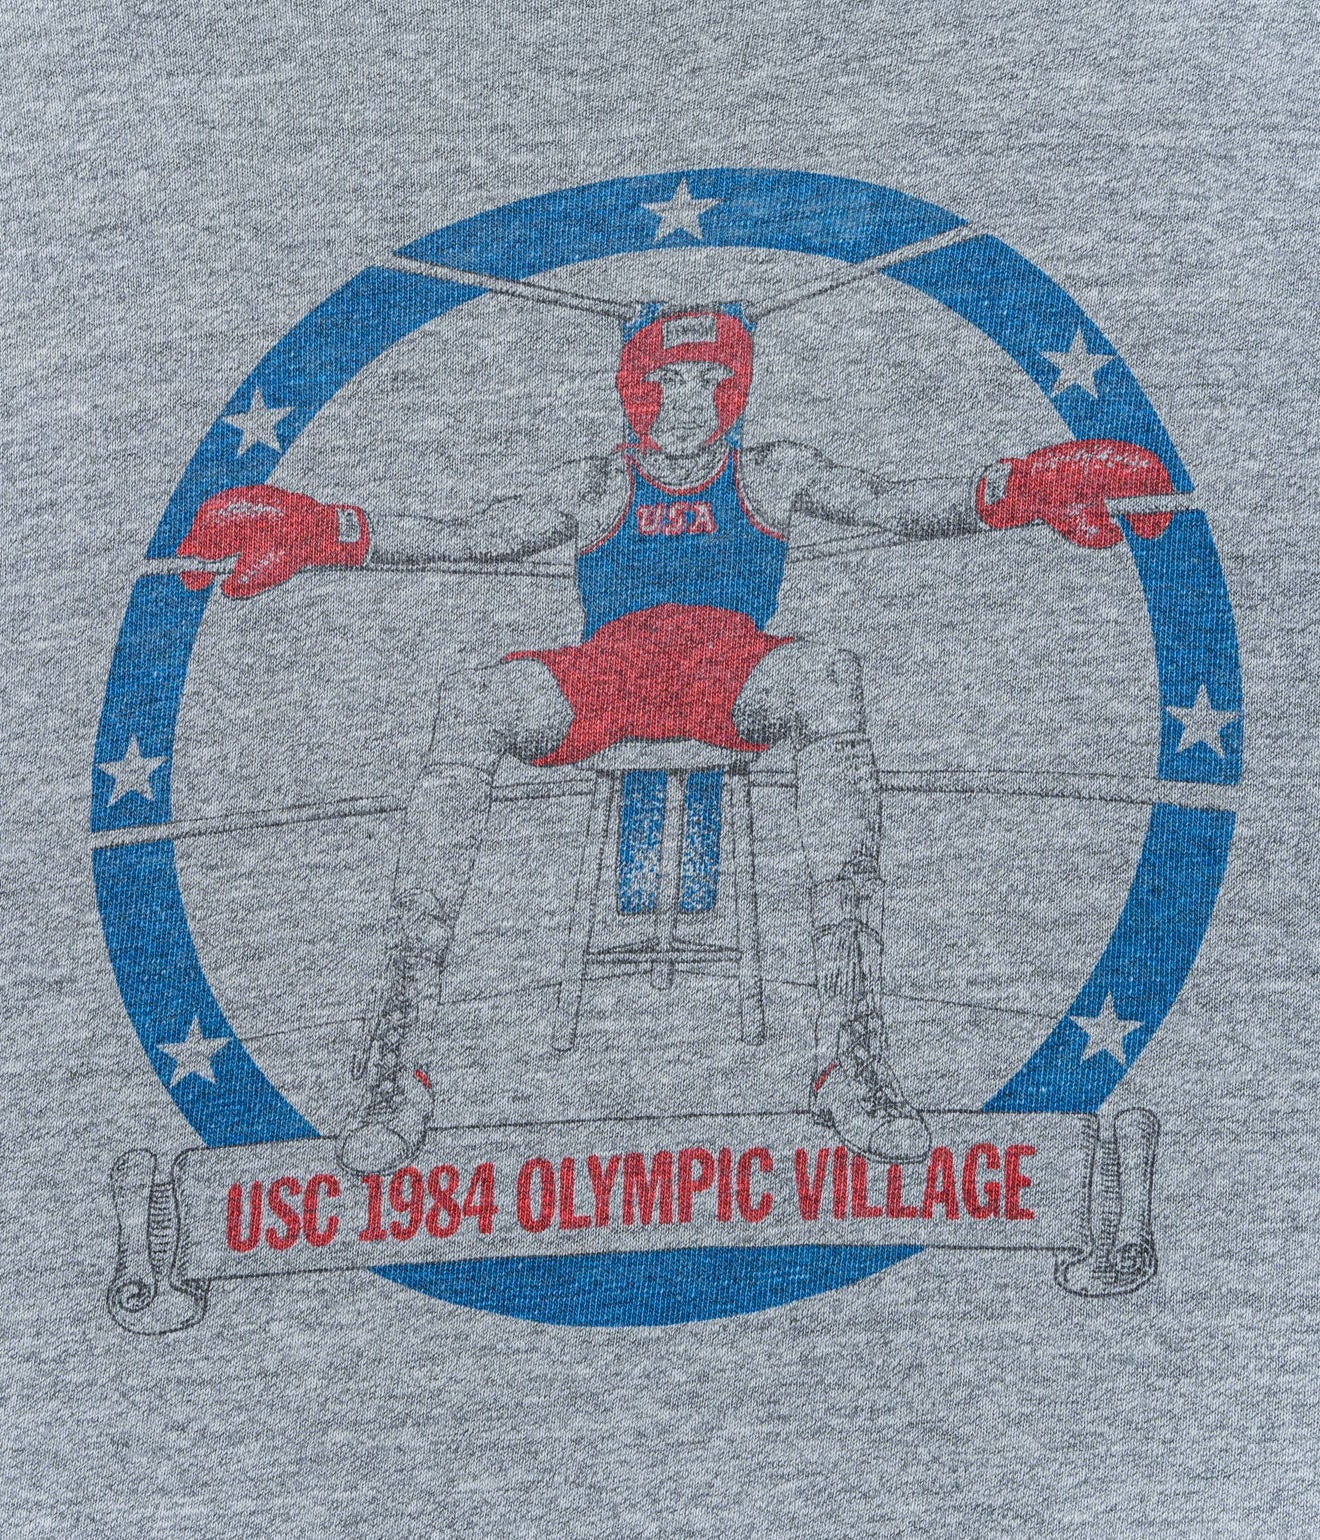 80's Champion "USC 1984 OLYMPIC VILLAGE" T-SHIRT - WEAREALLANIMALS